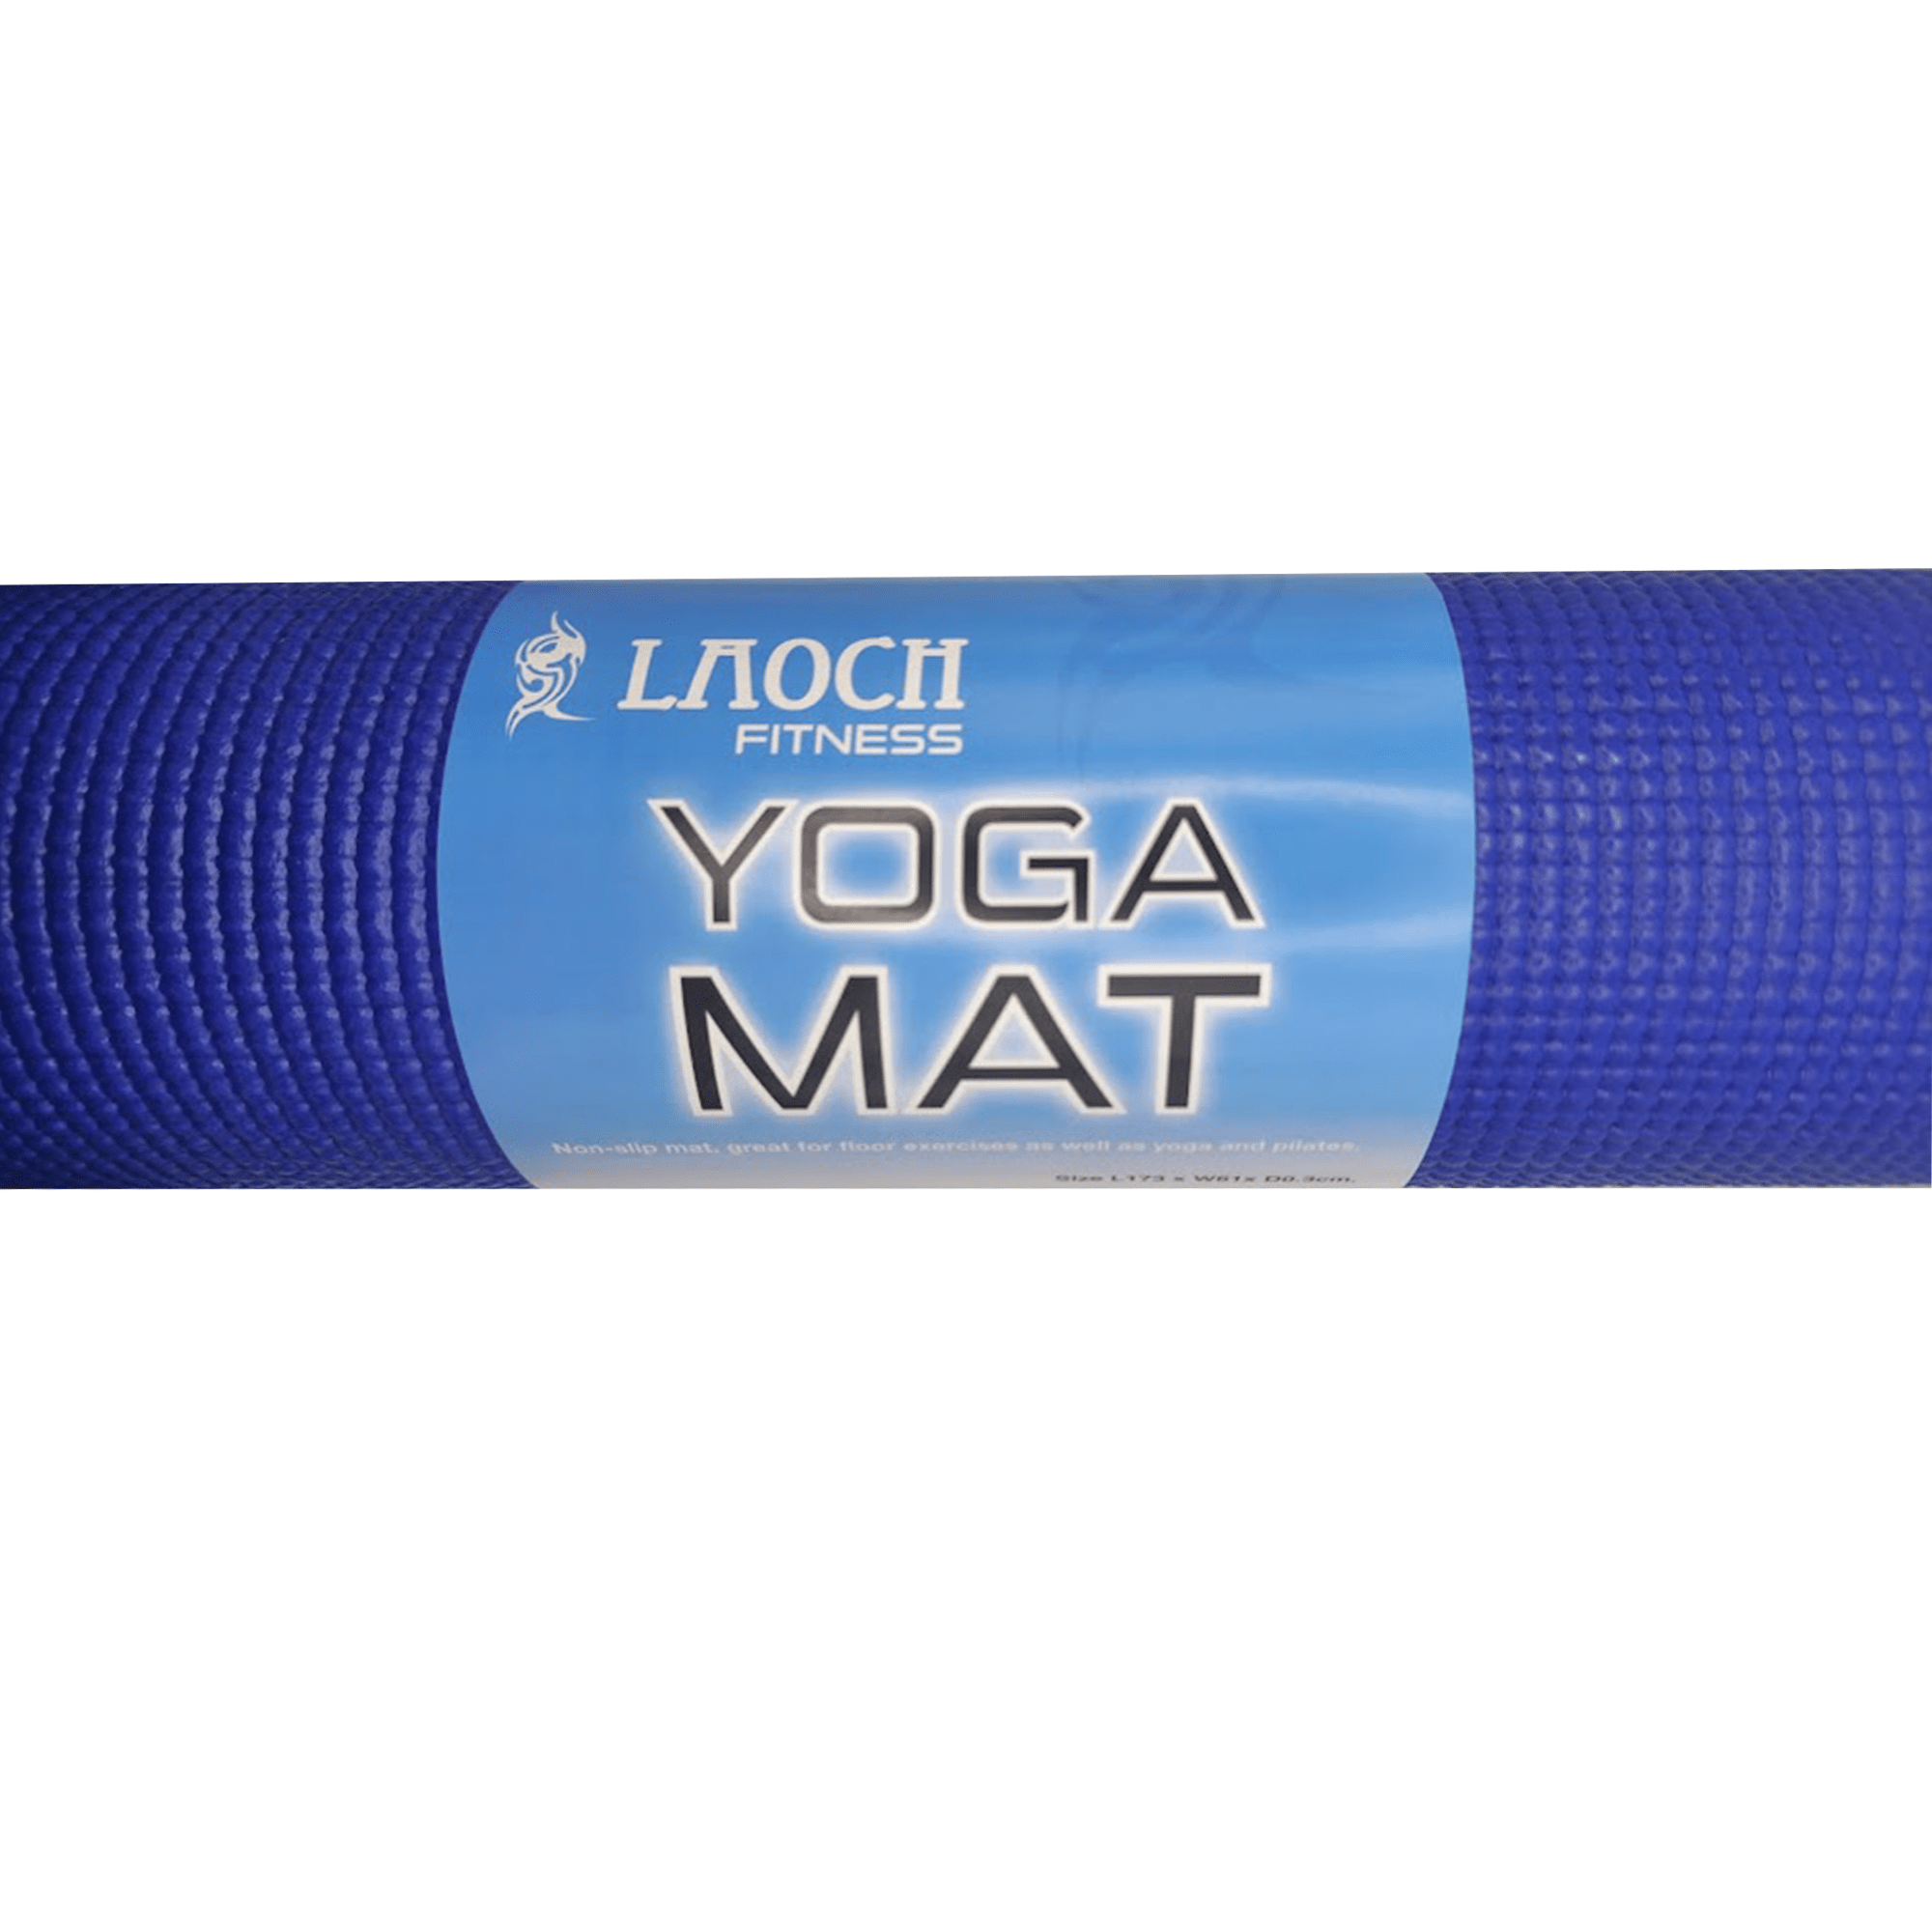 LAOCH Yoga Mat - Optimum